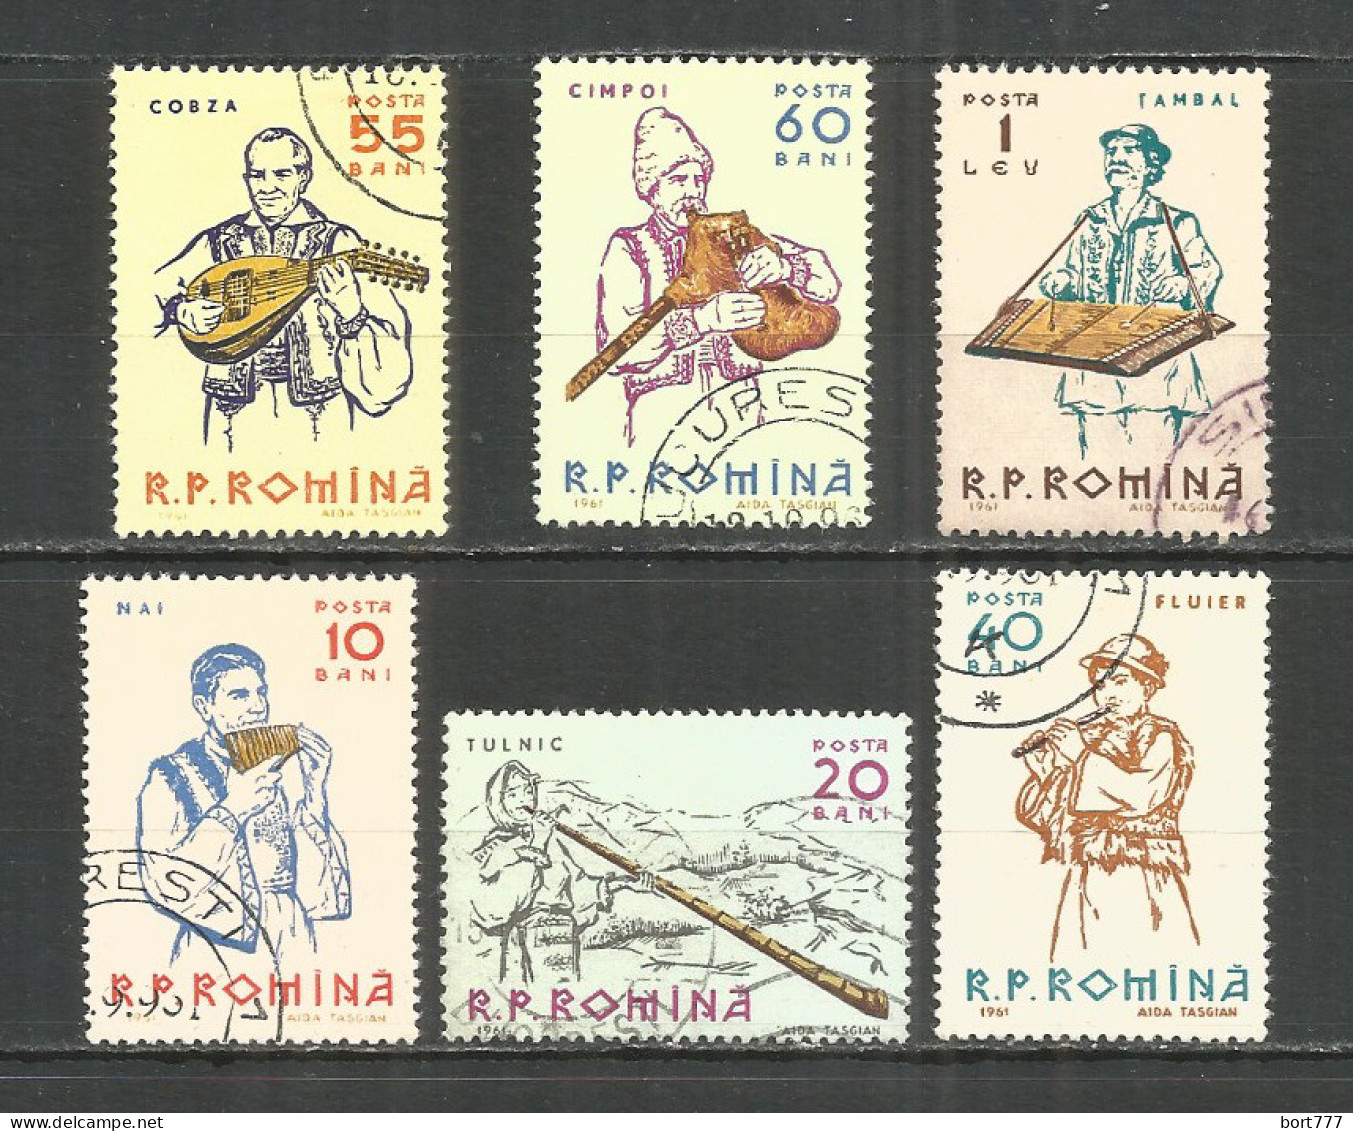 Romania 1961 Used Stamps Set  - Usati